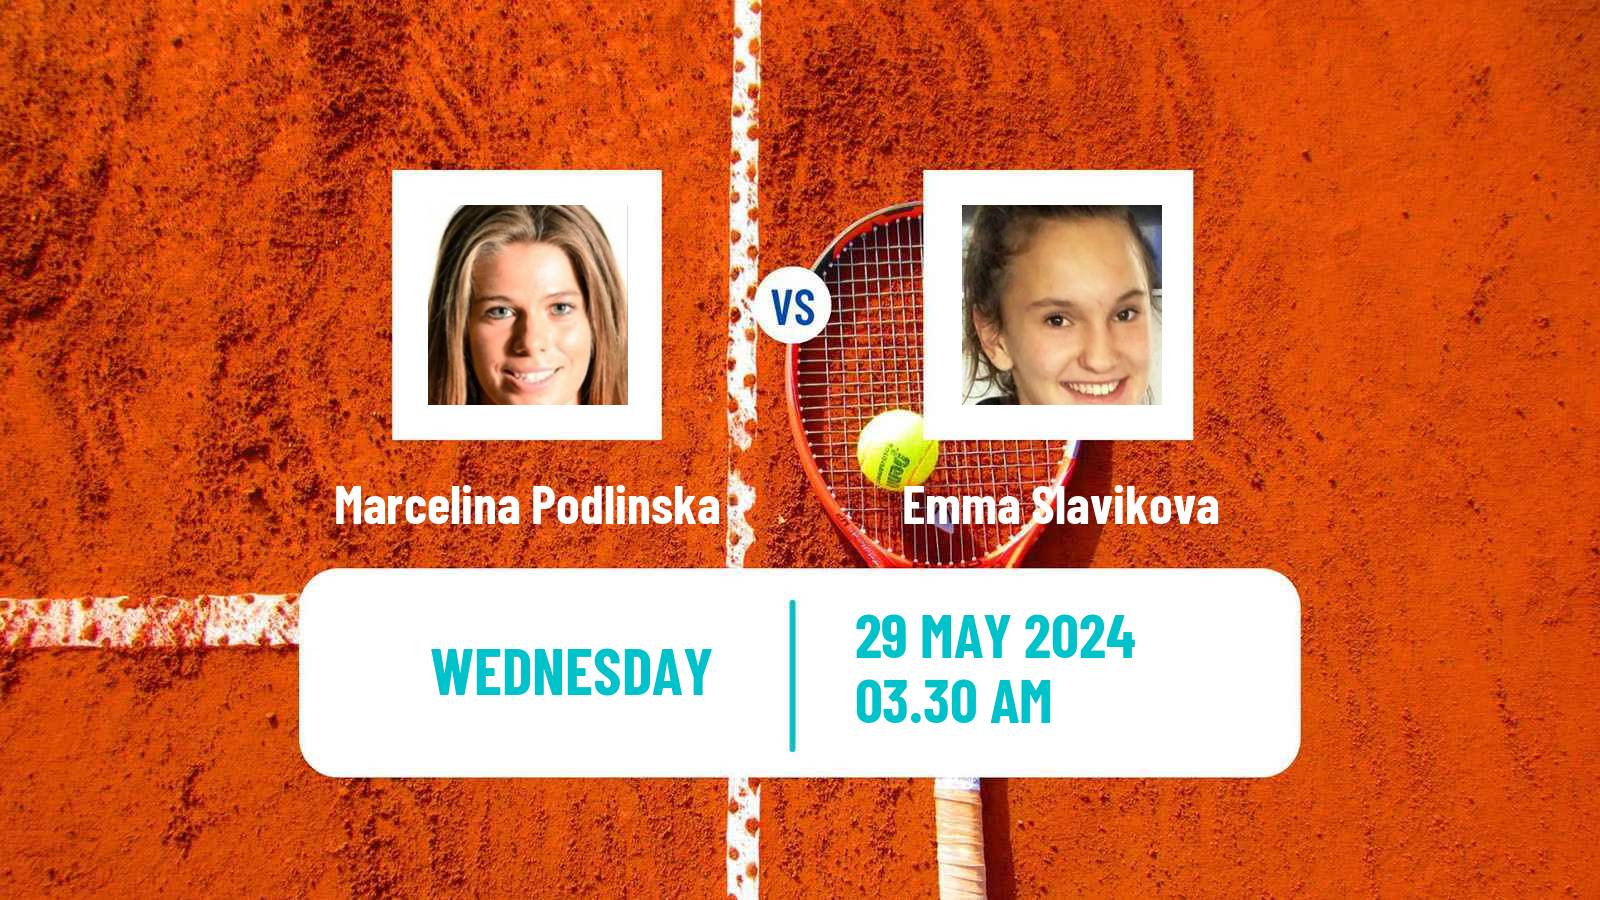 Tennis ITF W15 Bol 2 Women Marcelina Podlinska - Emma Slavikova